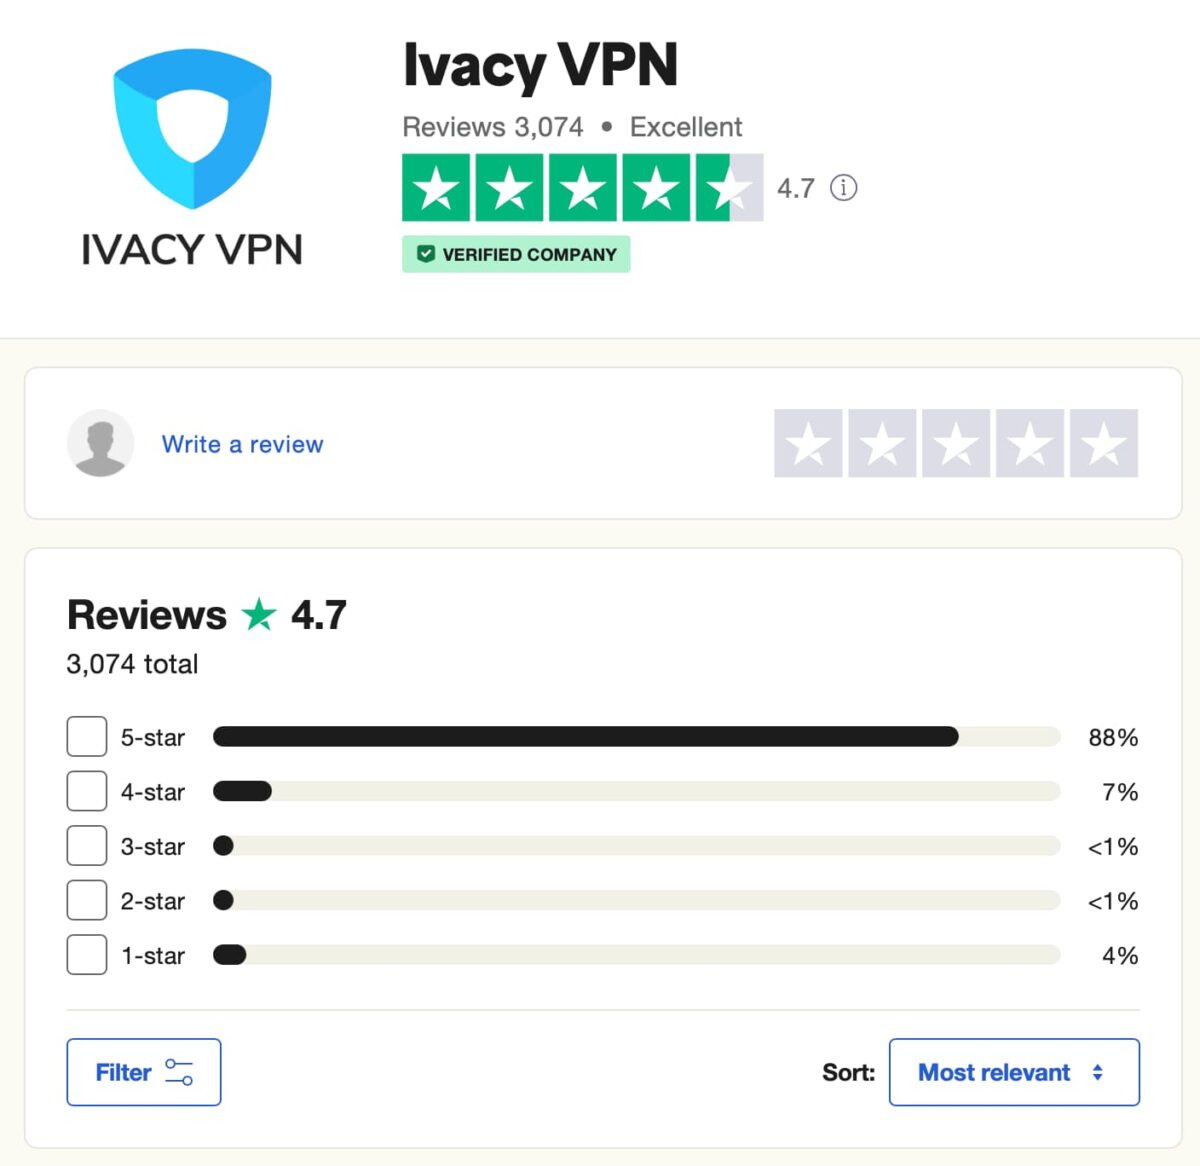 Ivacy VPN 評測與使用心得，Ivacy VPN 黑色星期五特價優惠該如何購買？ - 科技生活 - teXch